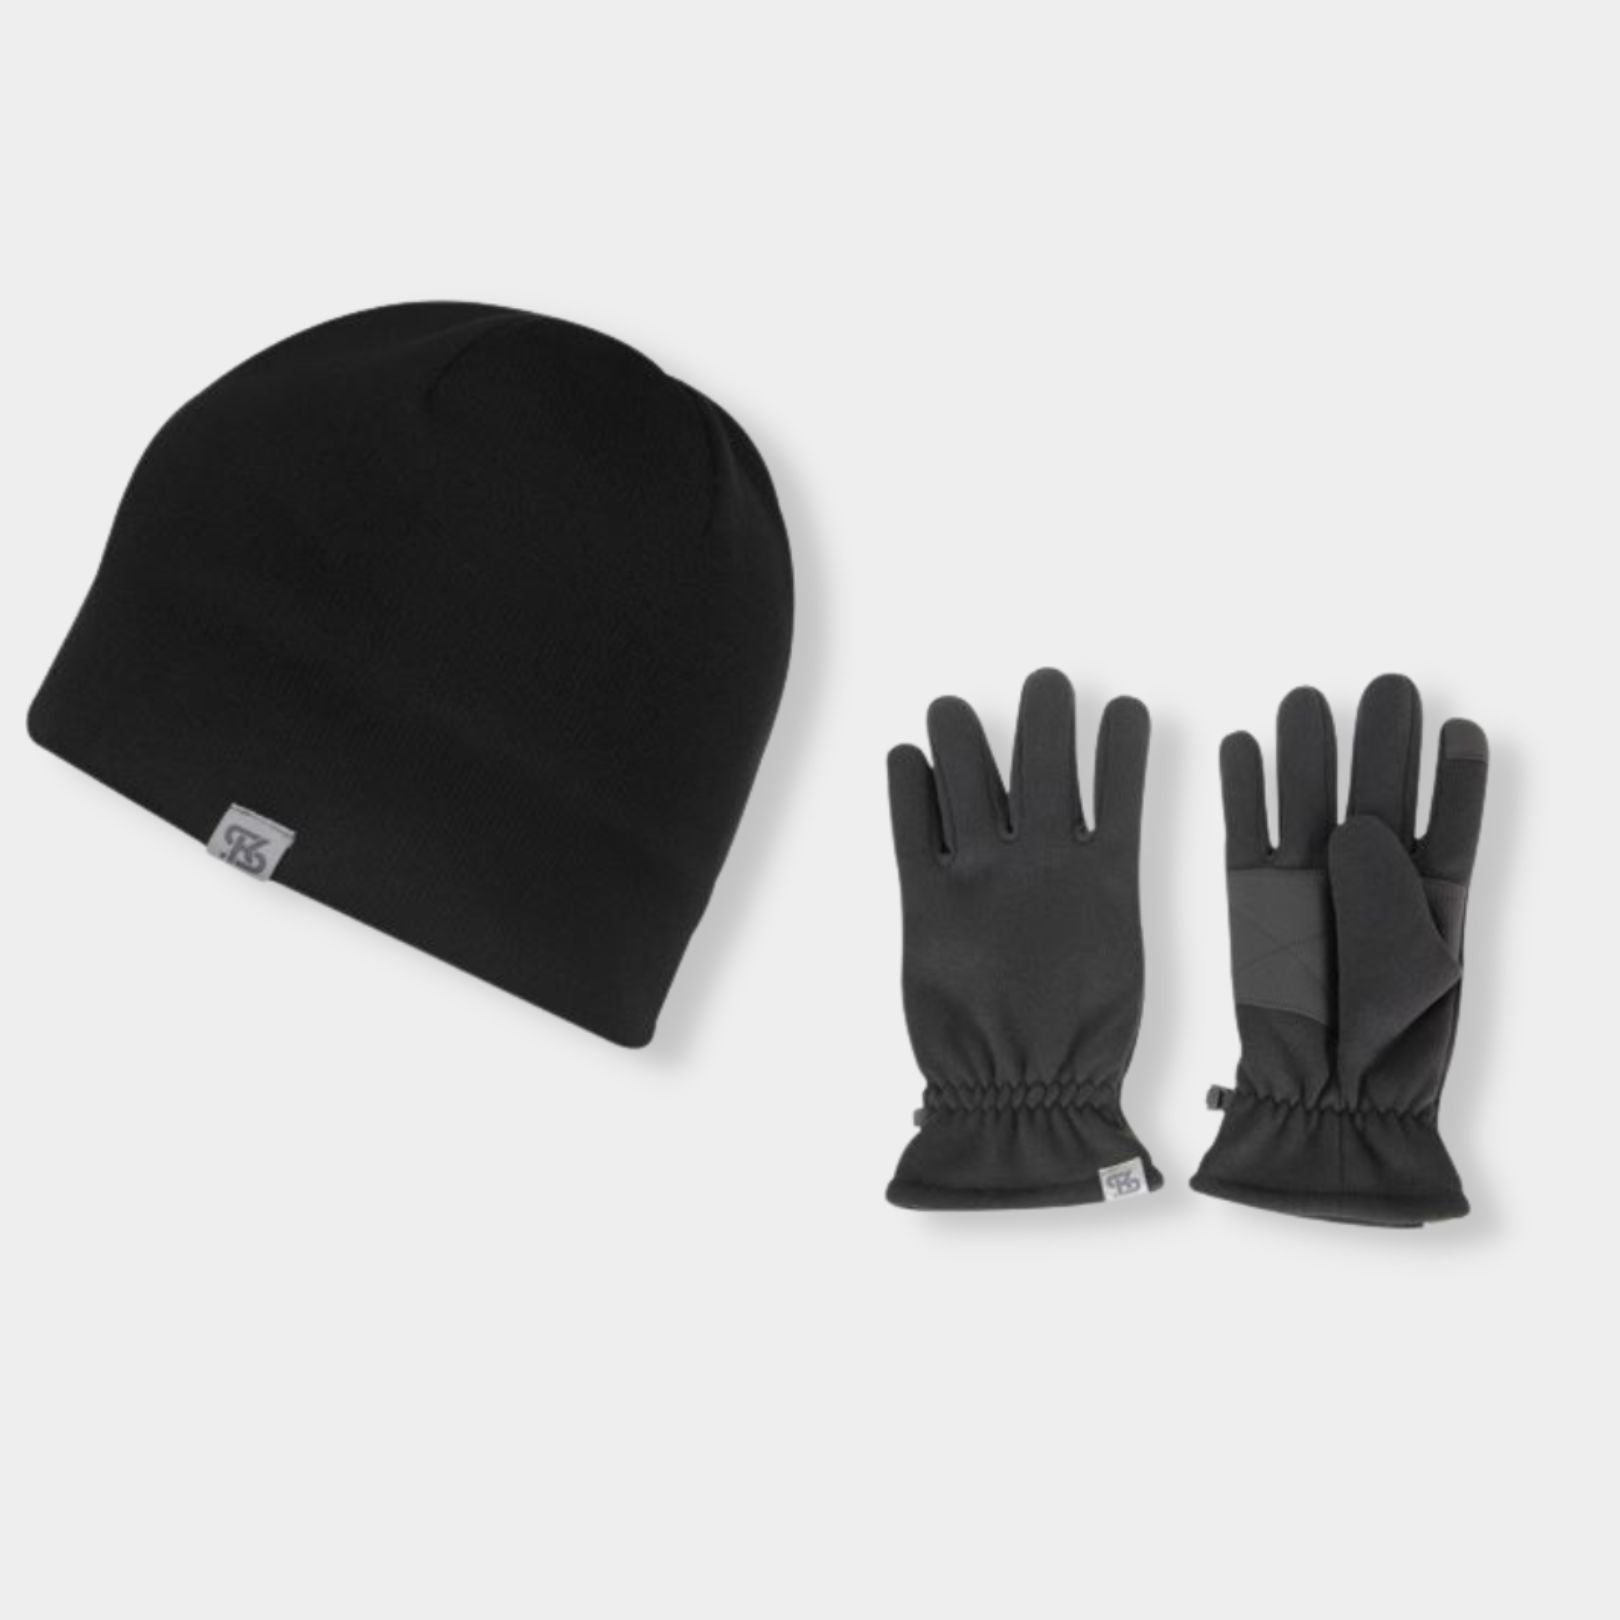 Gila Hat & Glove Combo Set